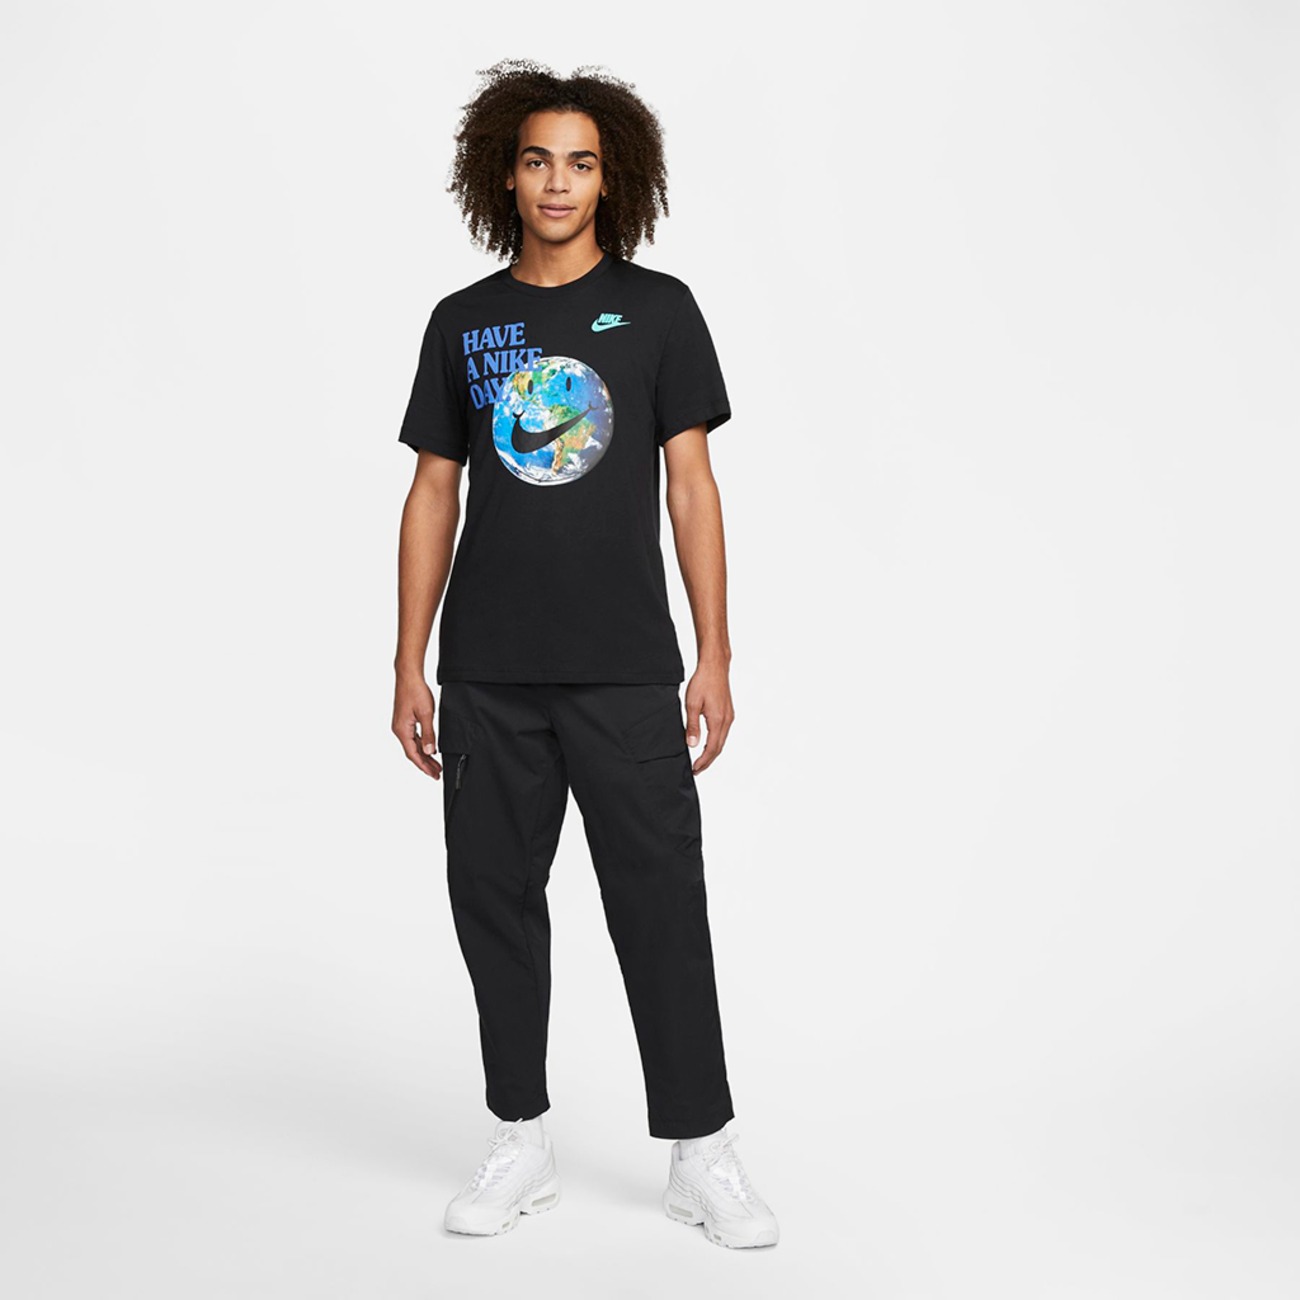 Camiseta Nike Sportswear Masculina - Foto 4